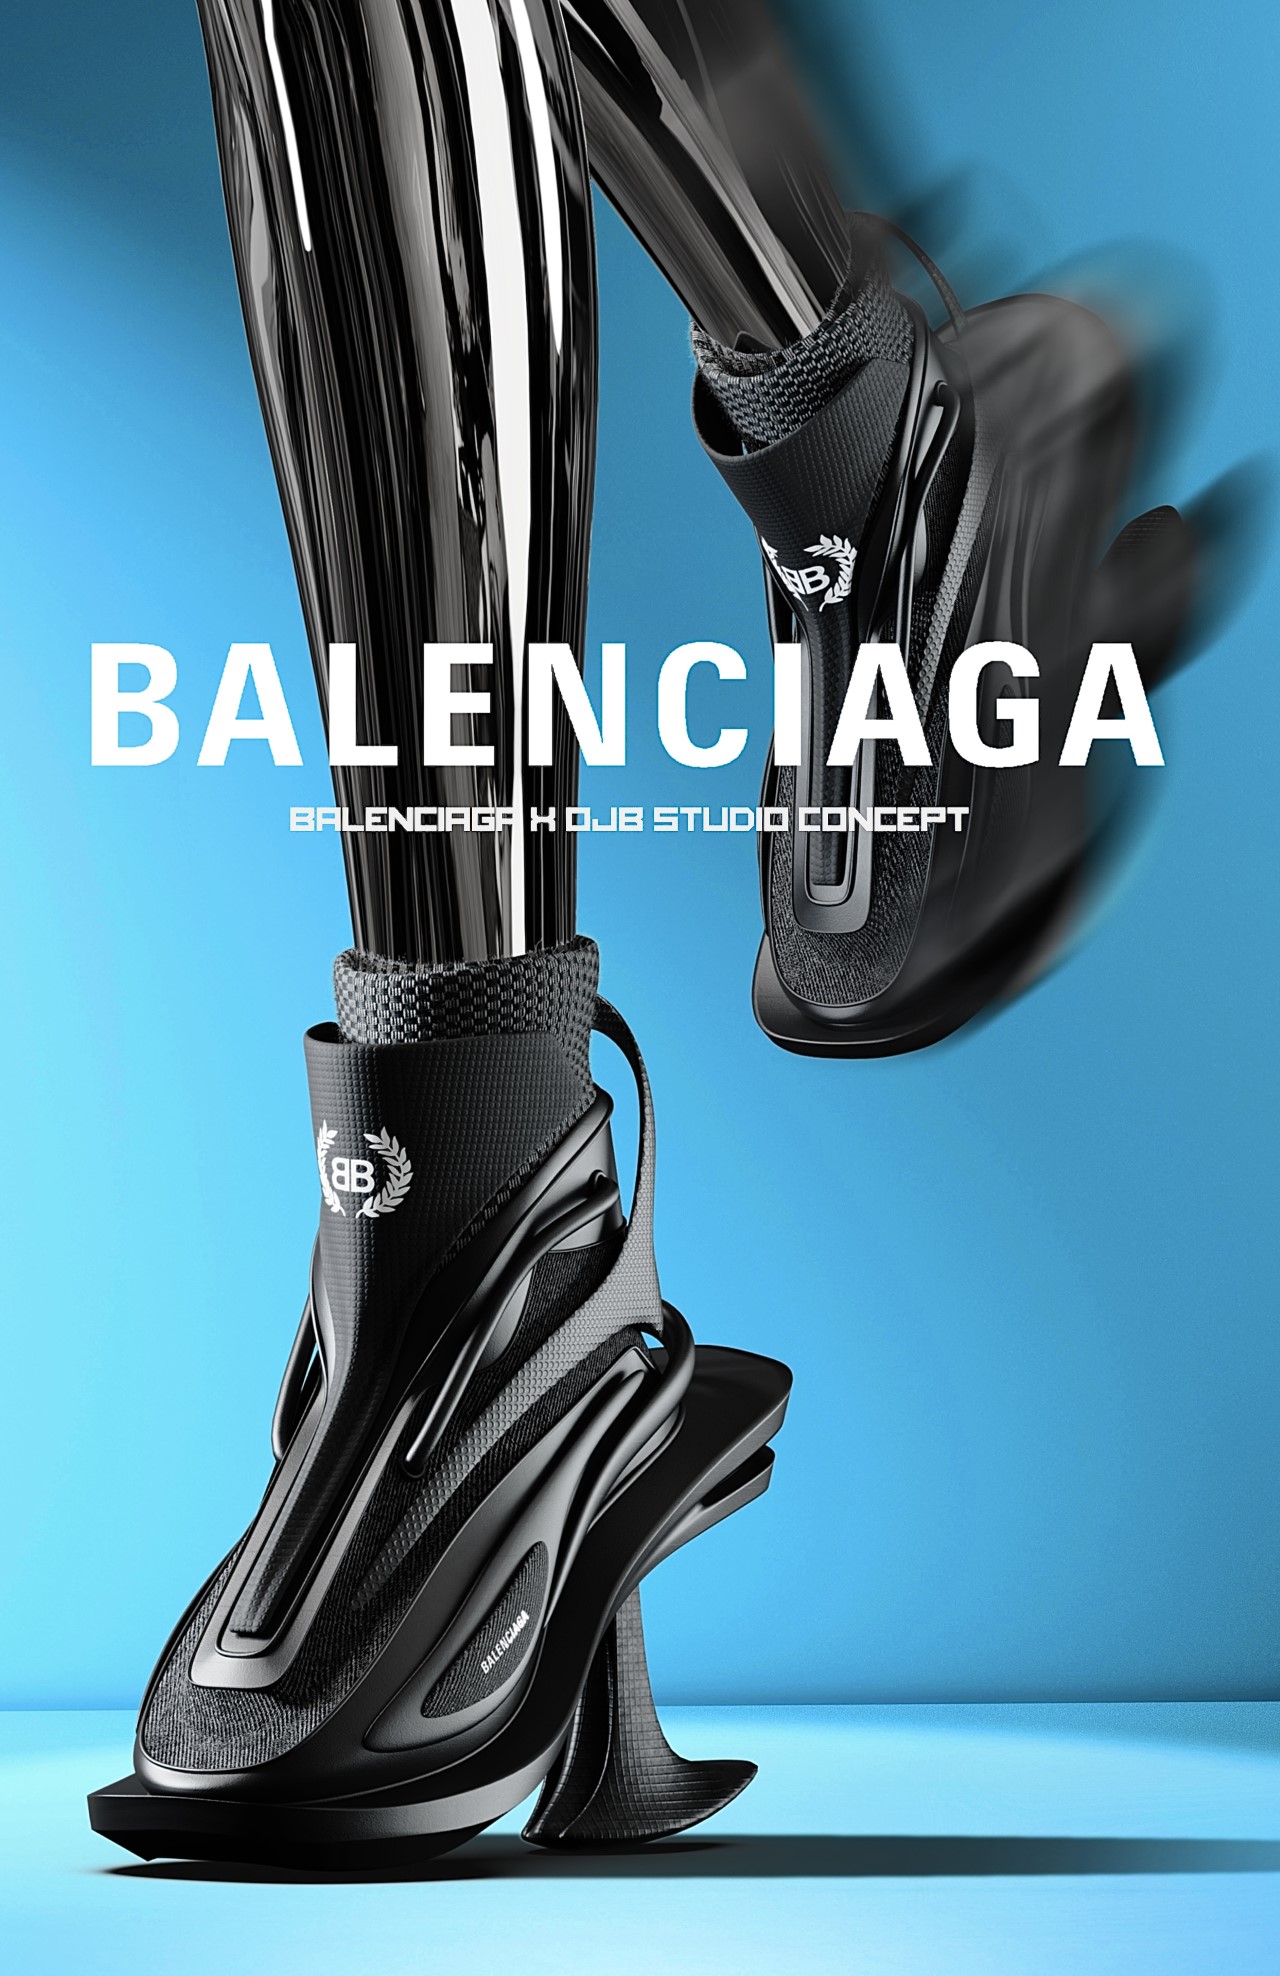 Balenciaga high-heel sneakers with fluid 3D-printed design shows 